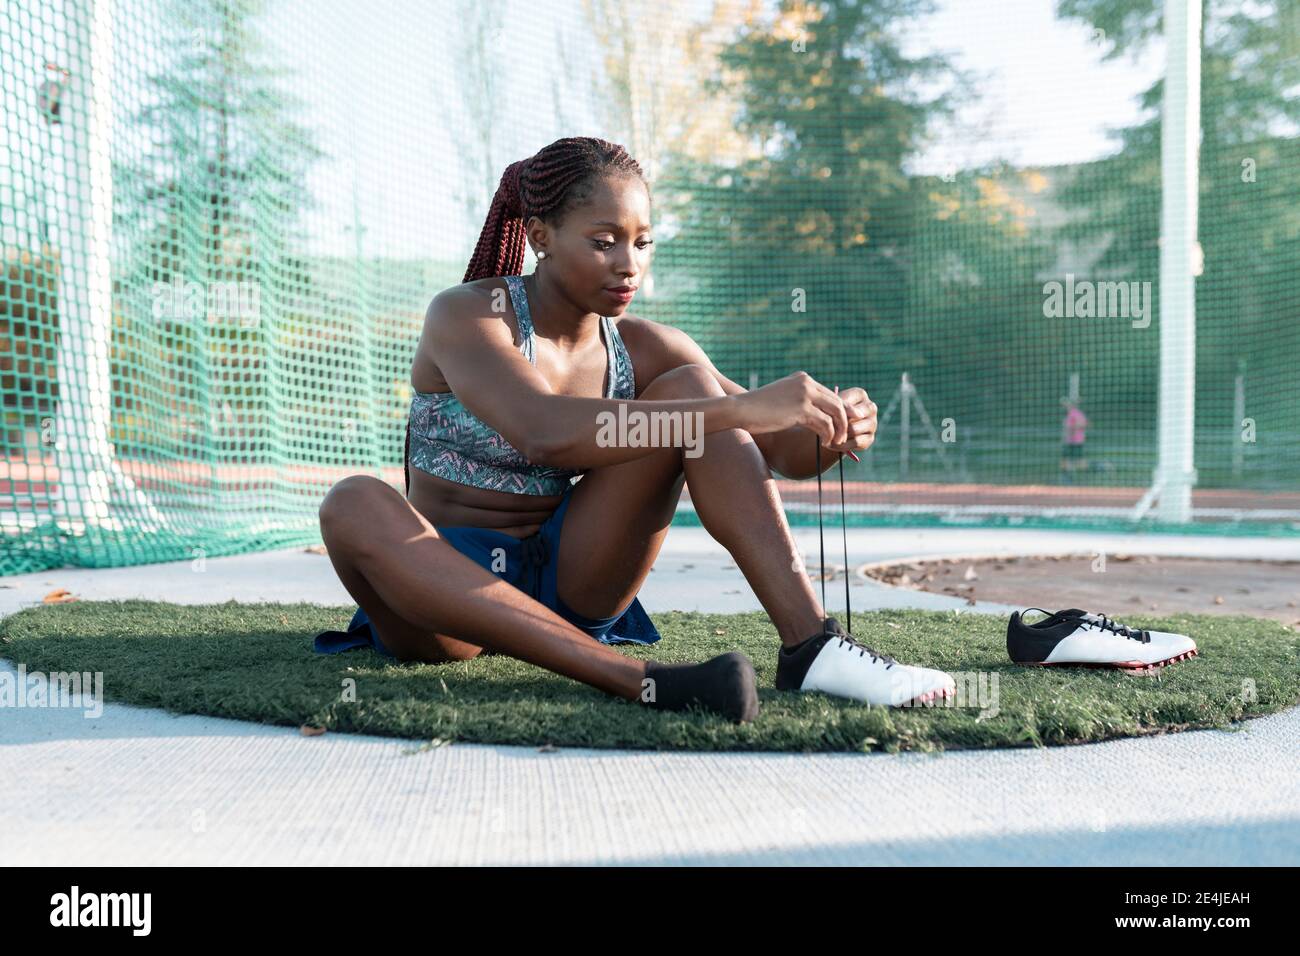 Female athlete tying shoelace against net in sports court Stock Photo